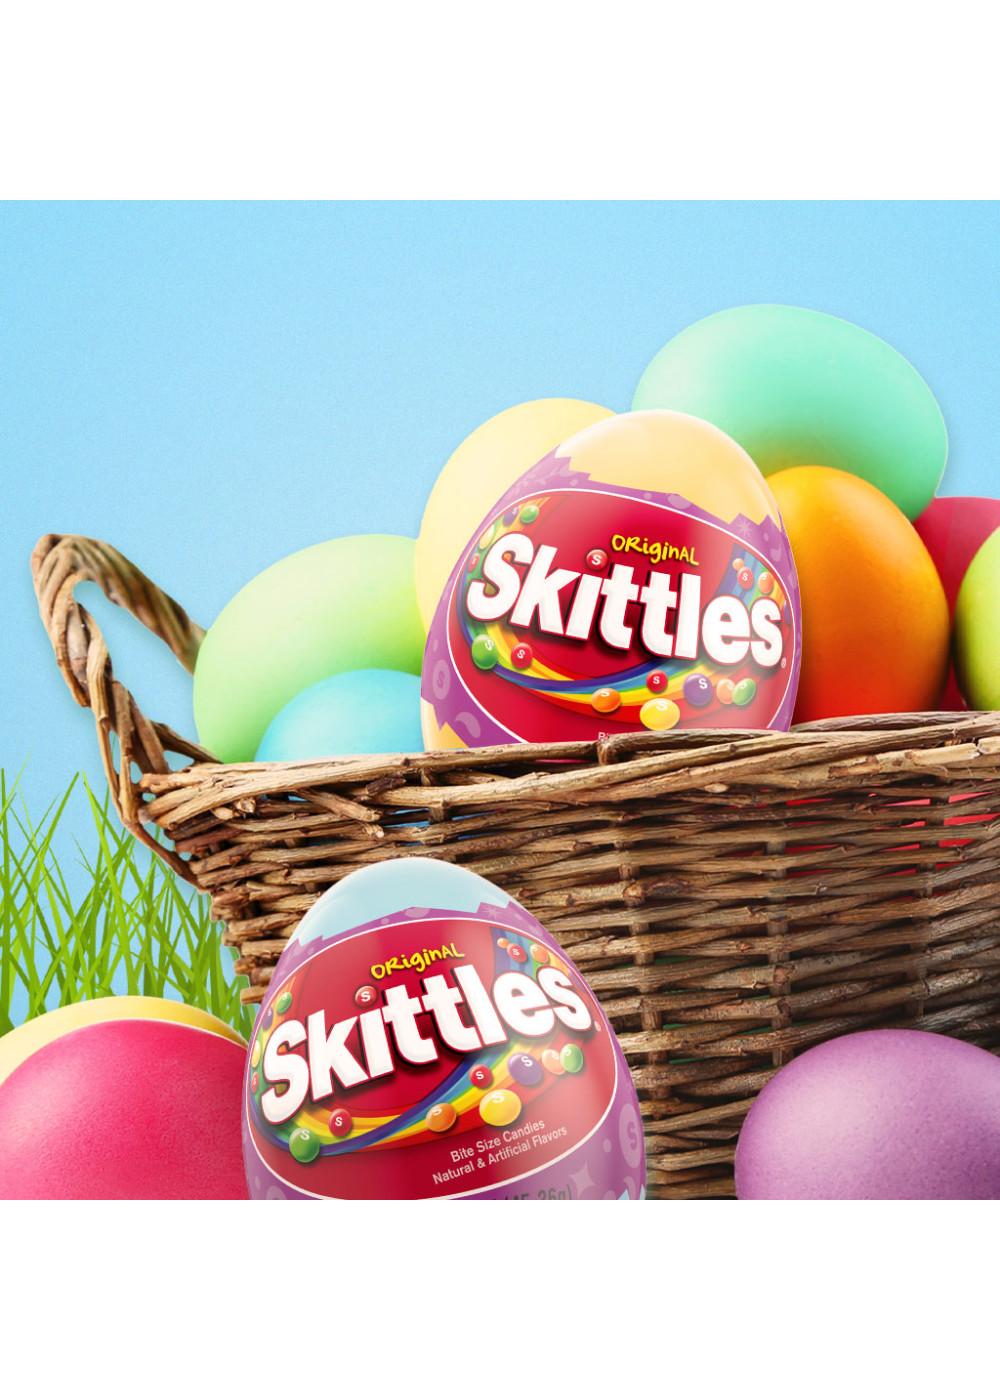 Skittles Original Candy Easter Egg; image 5 of 7